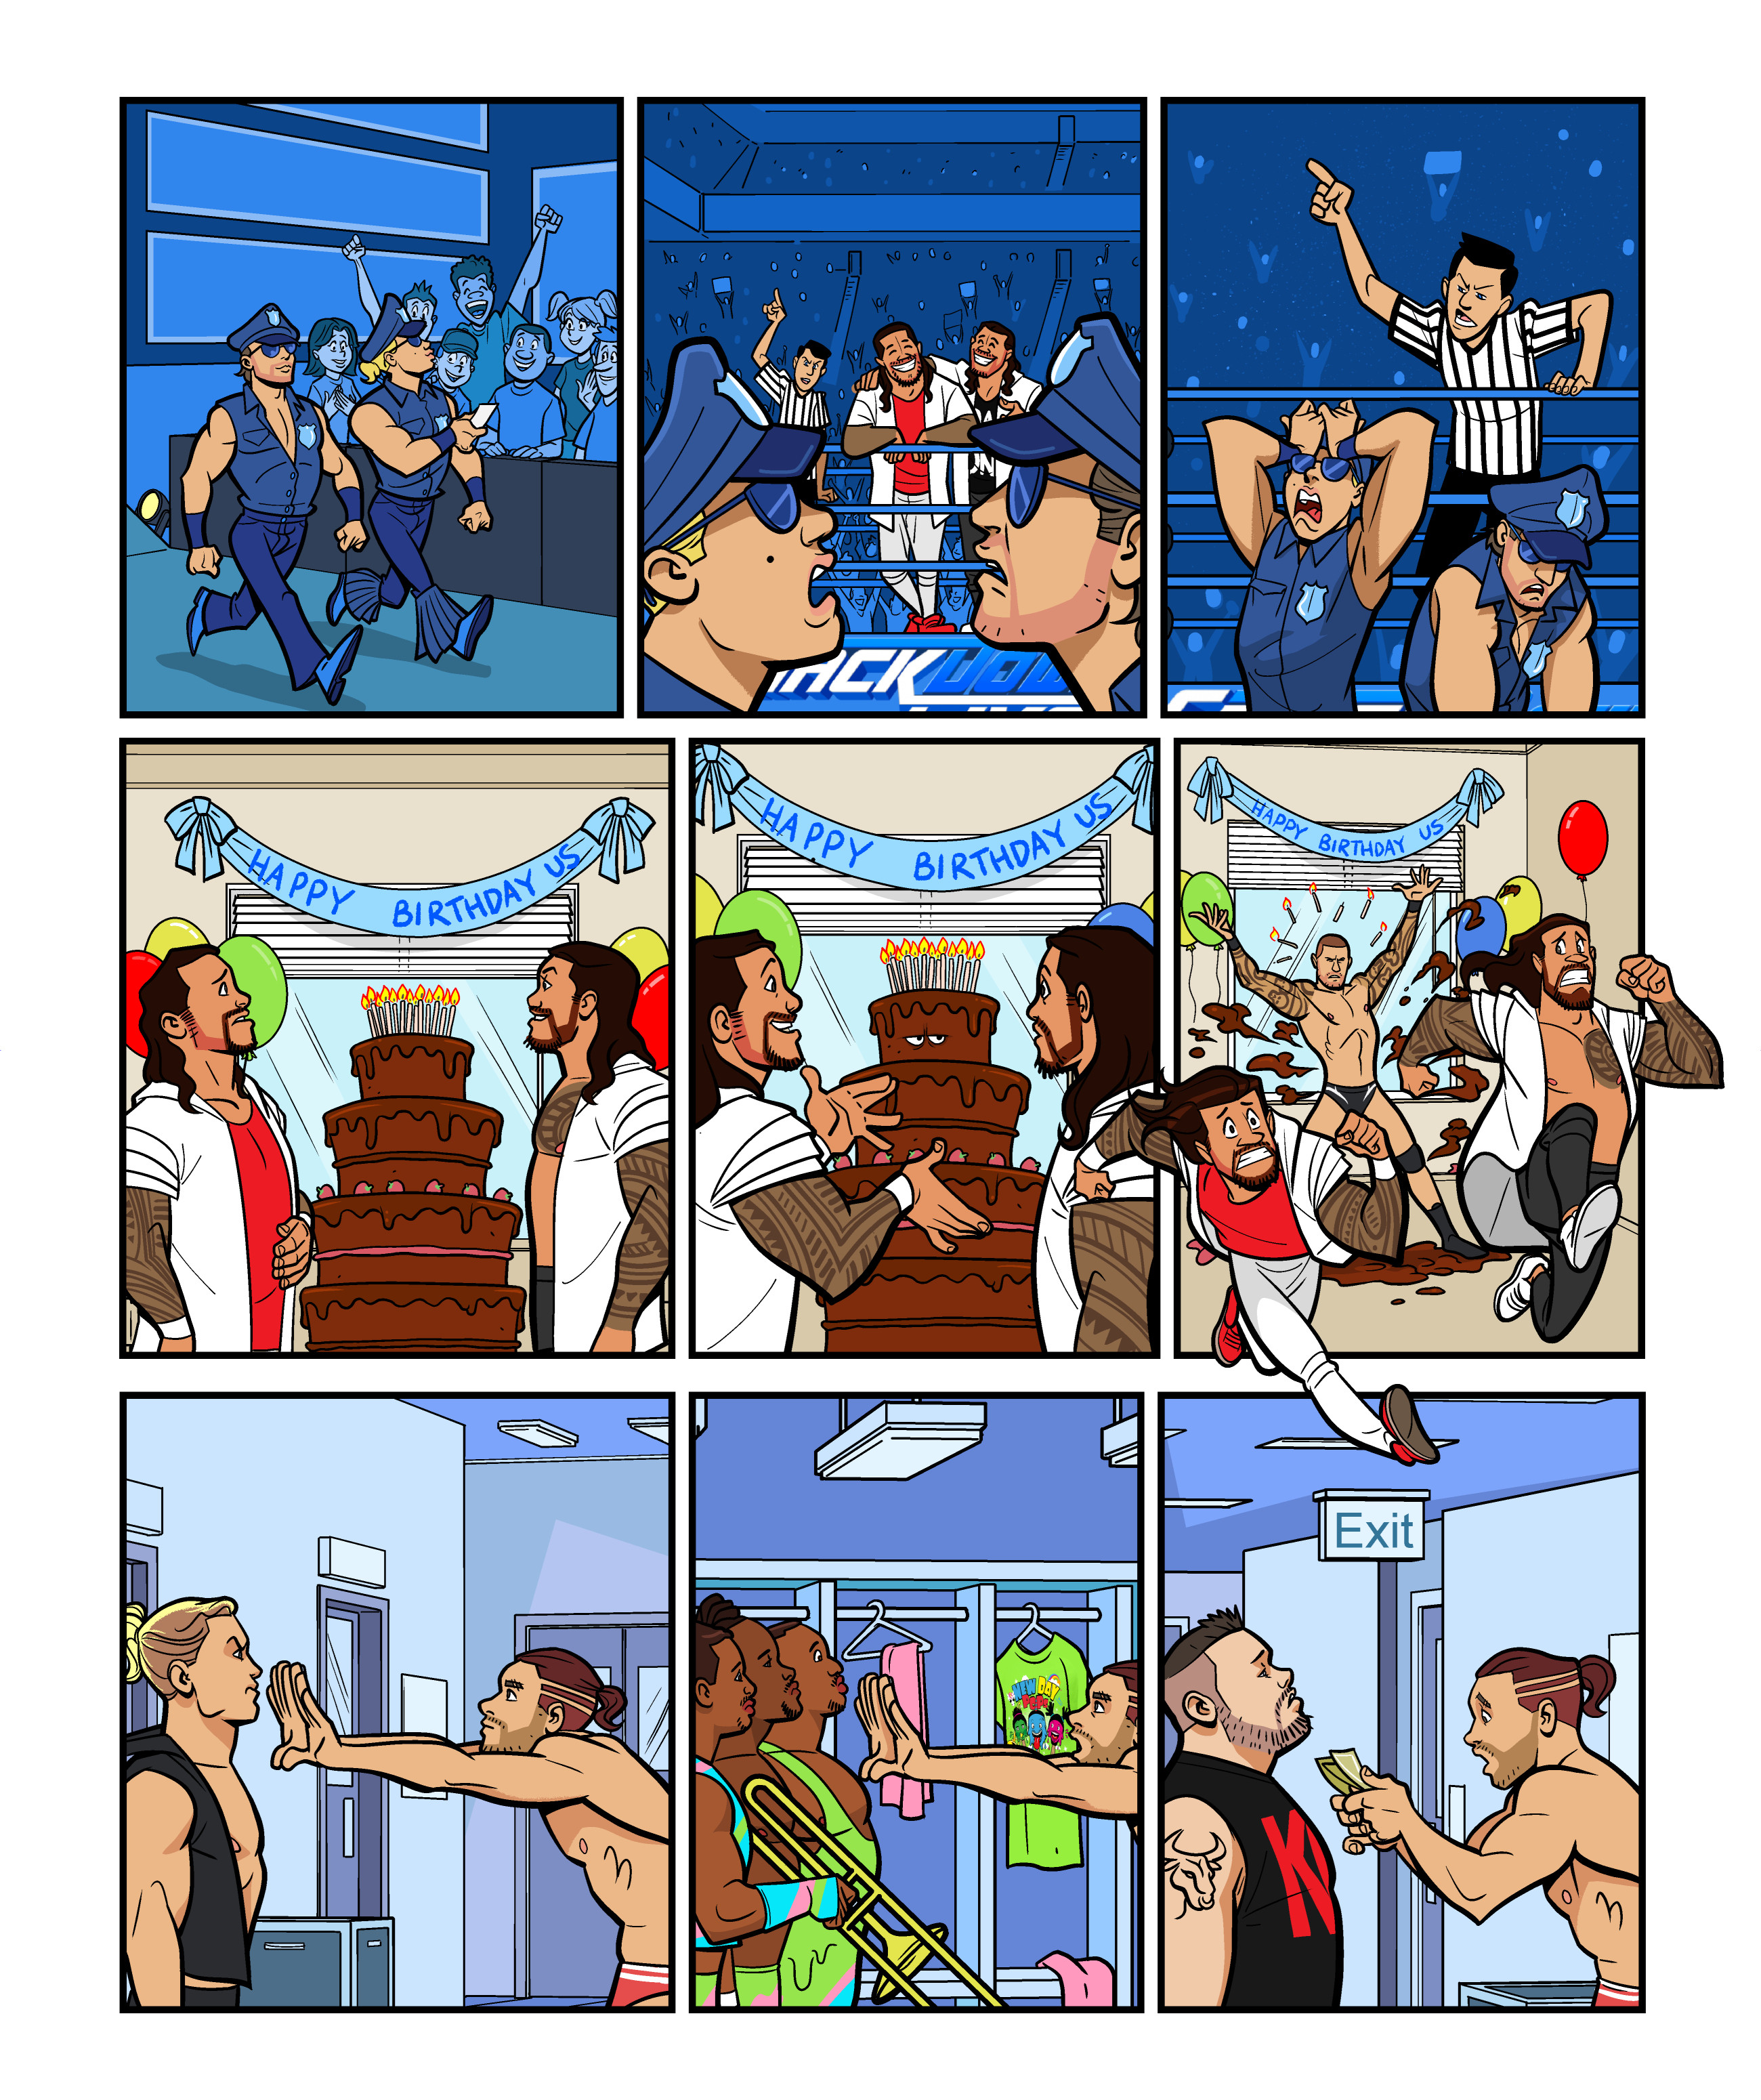 WWE Smackdown Live comic strips for WWE Kids Magazine #125